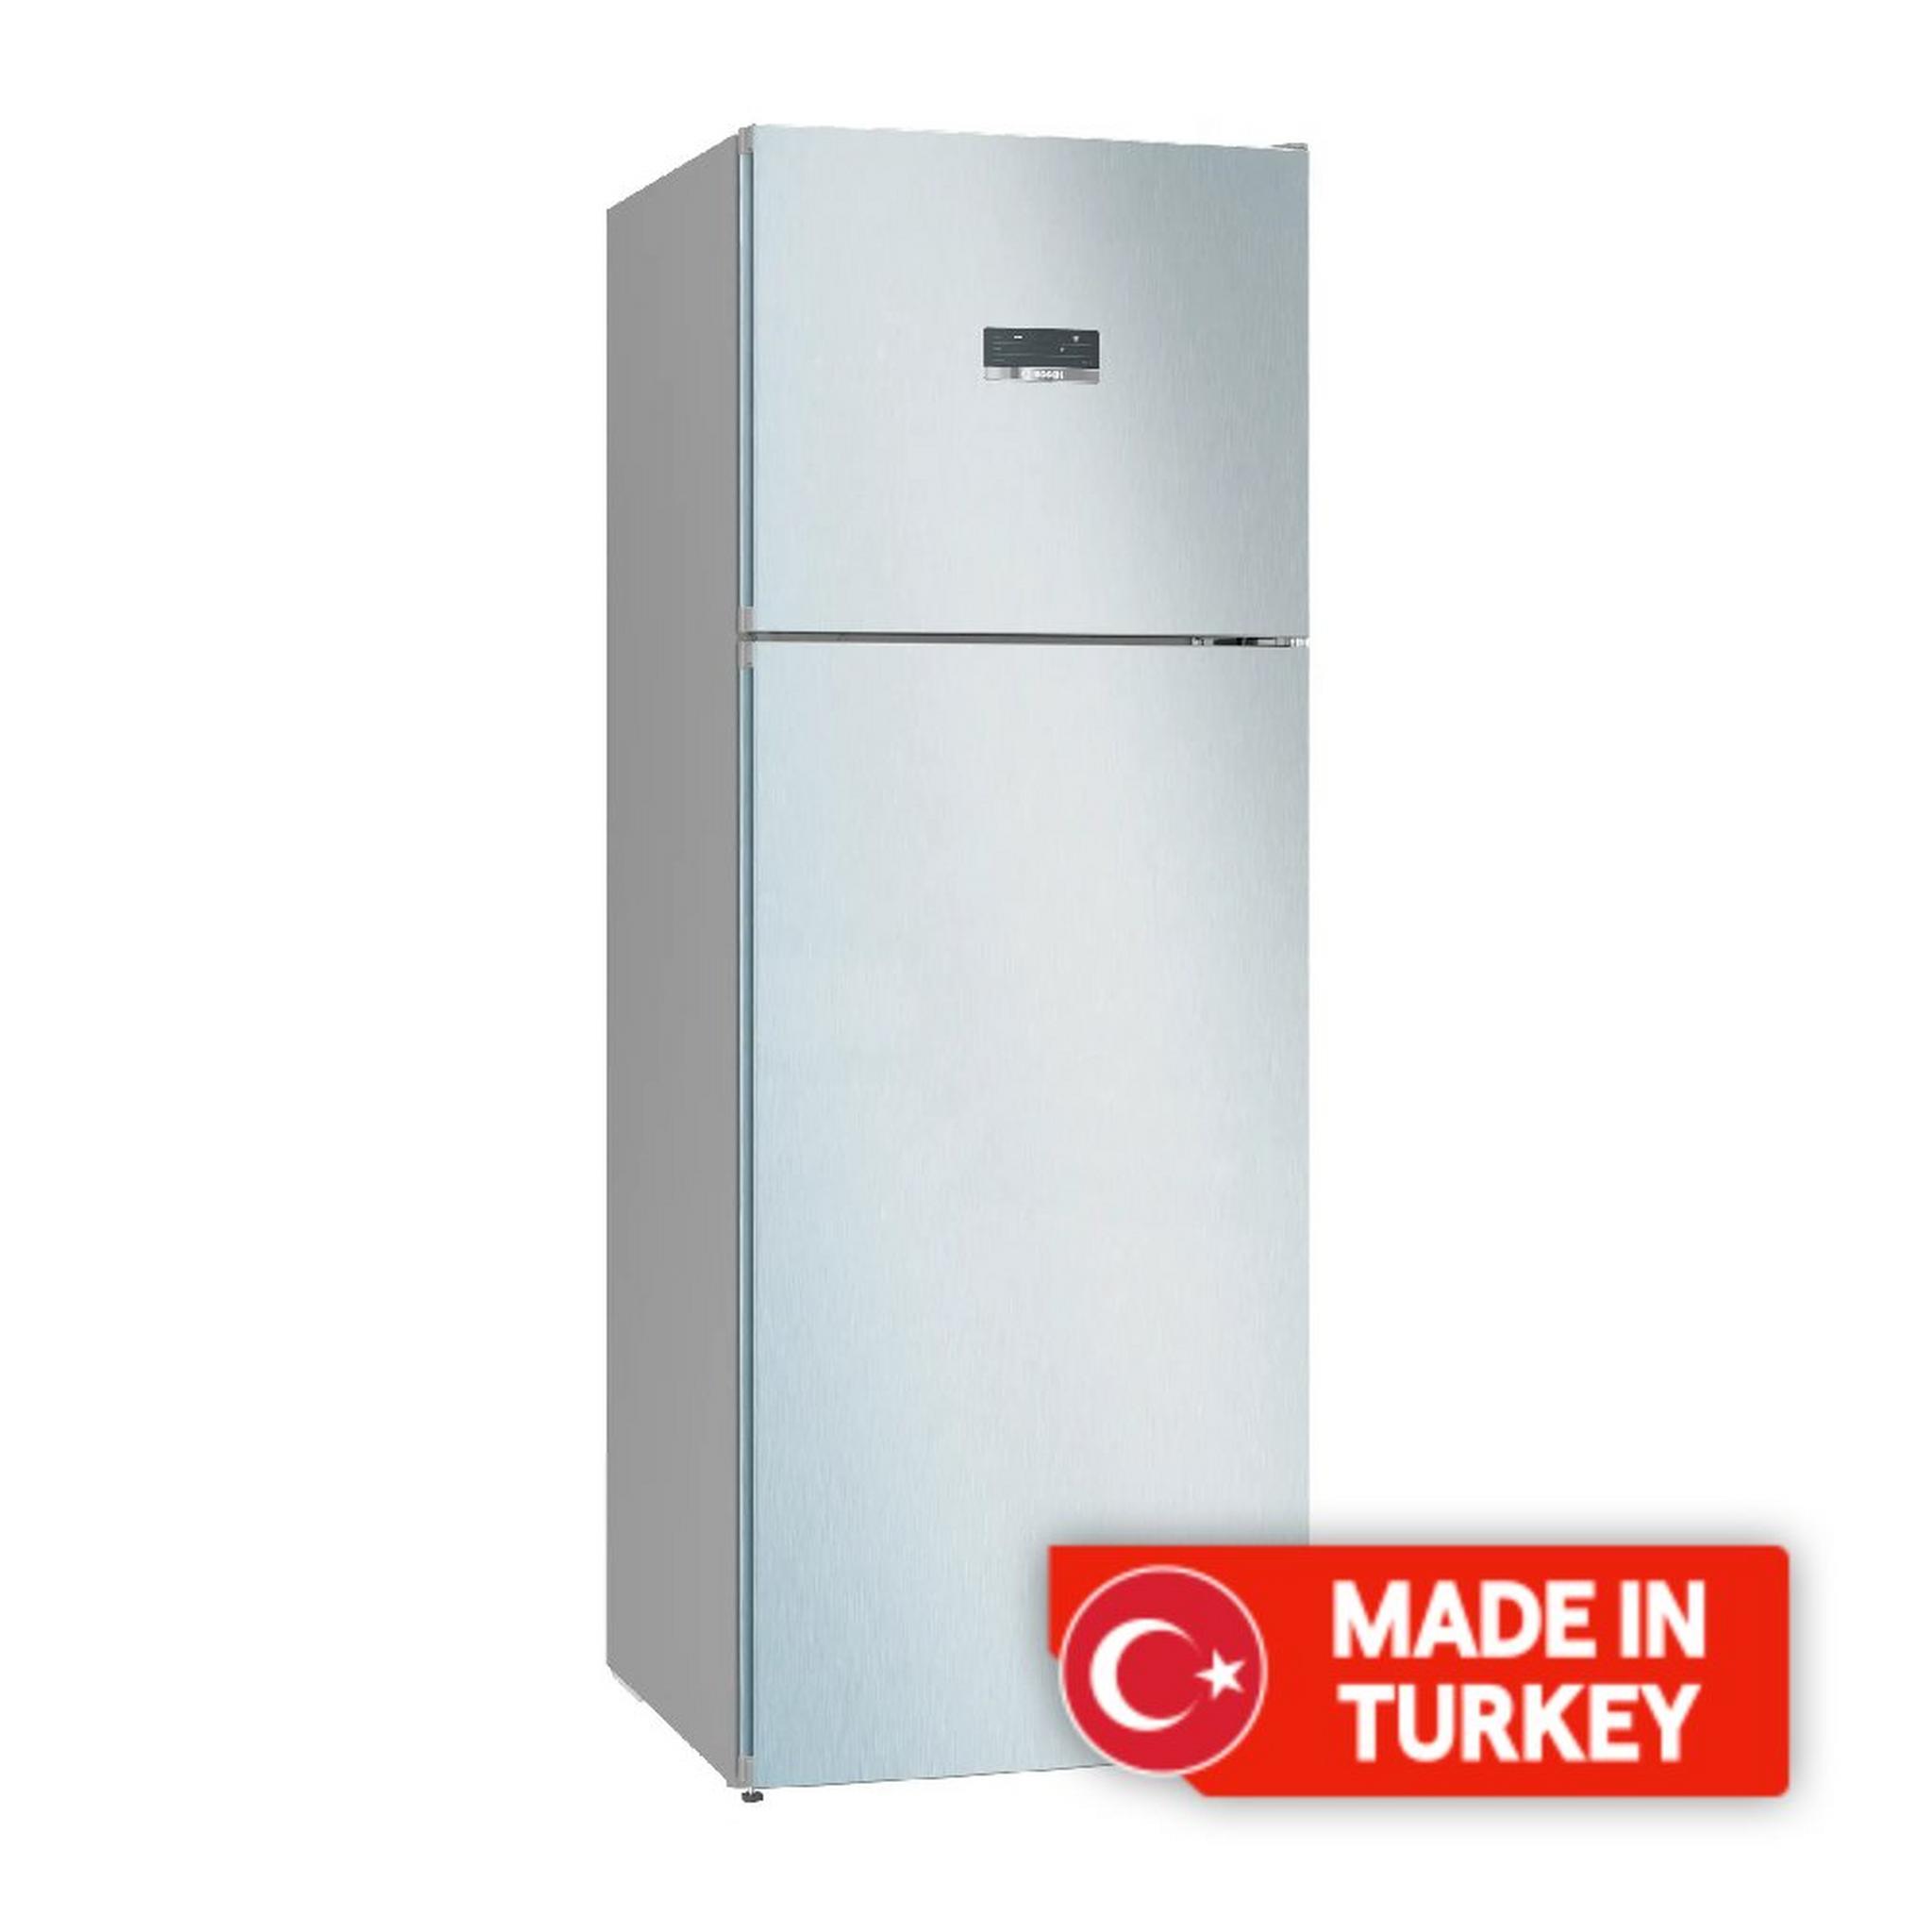 BOSCH Series 4 Top Mount Refrigerator, 19.8Cft, 563-Liters, KDN56XL31M - Stainless steel